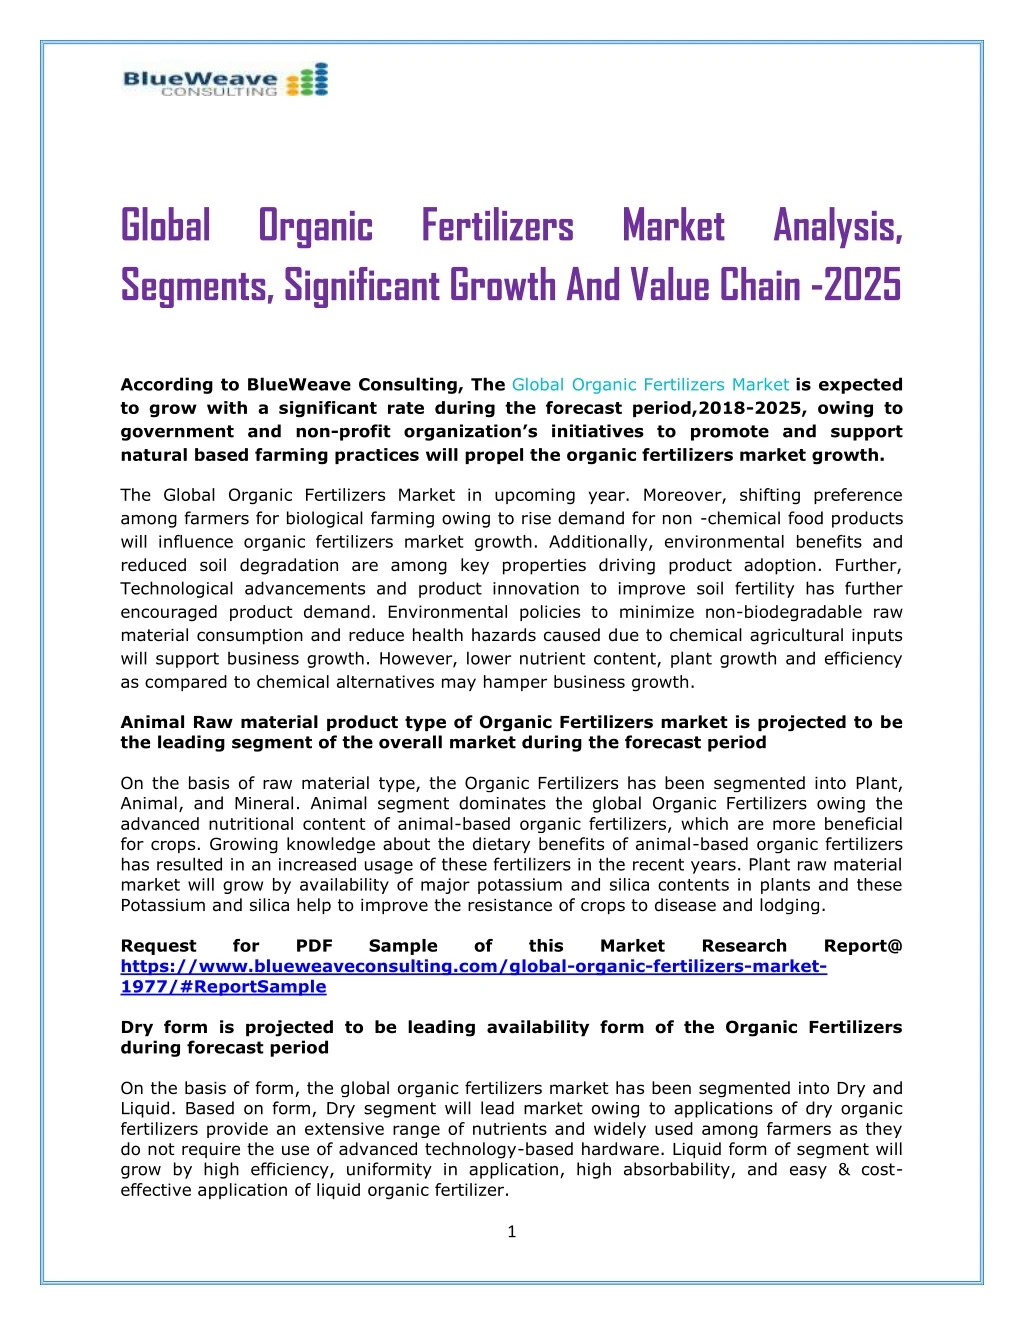 global organic fertilizers market analysis